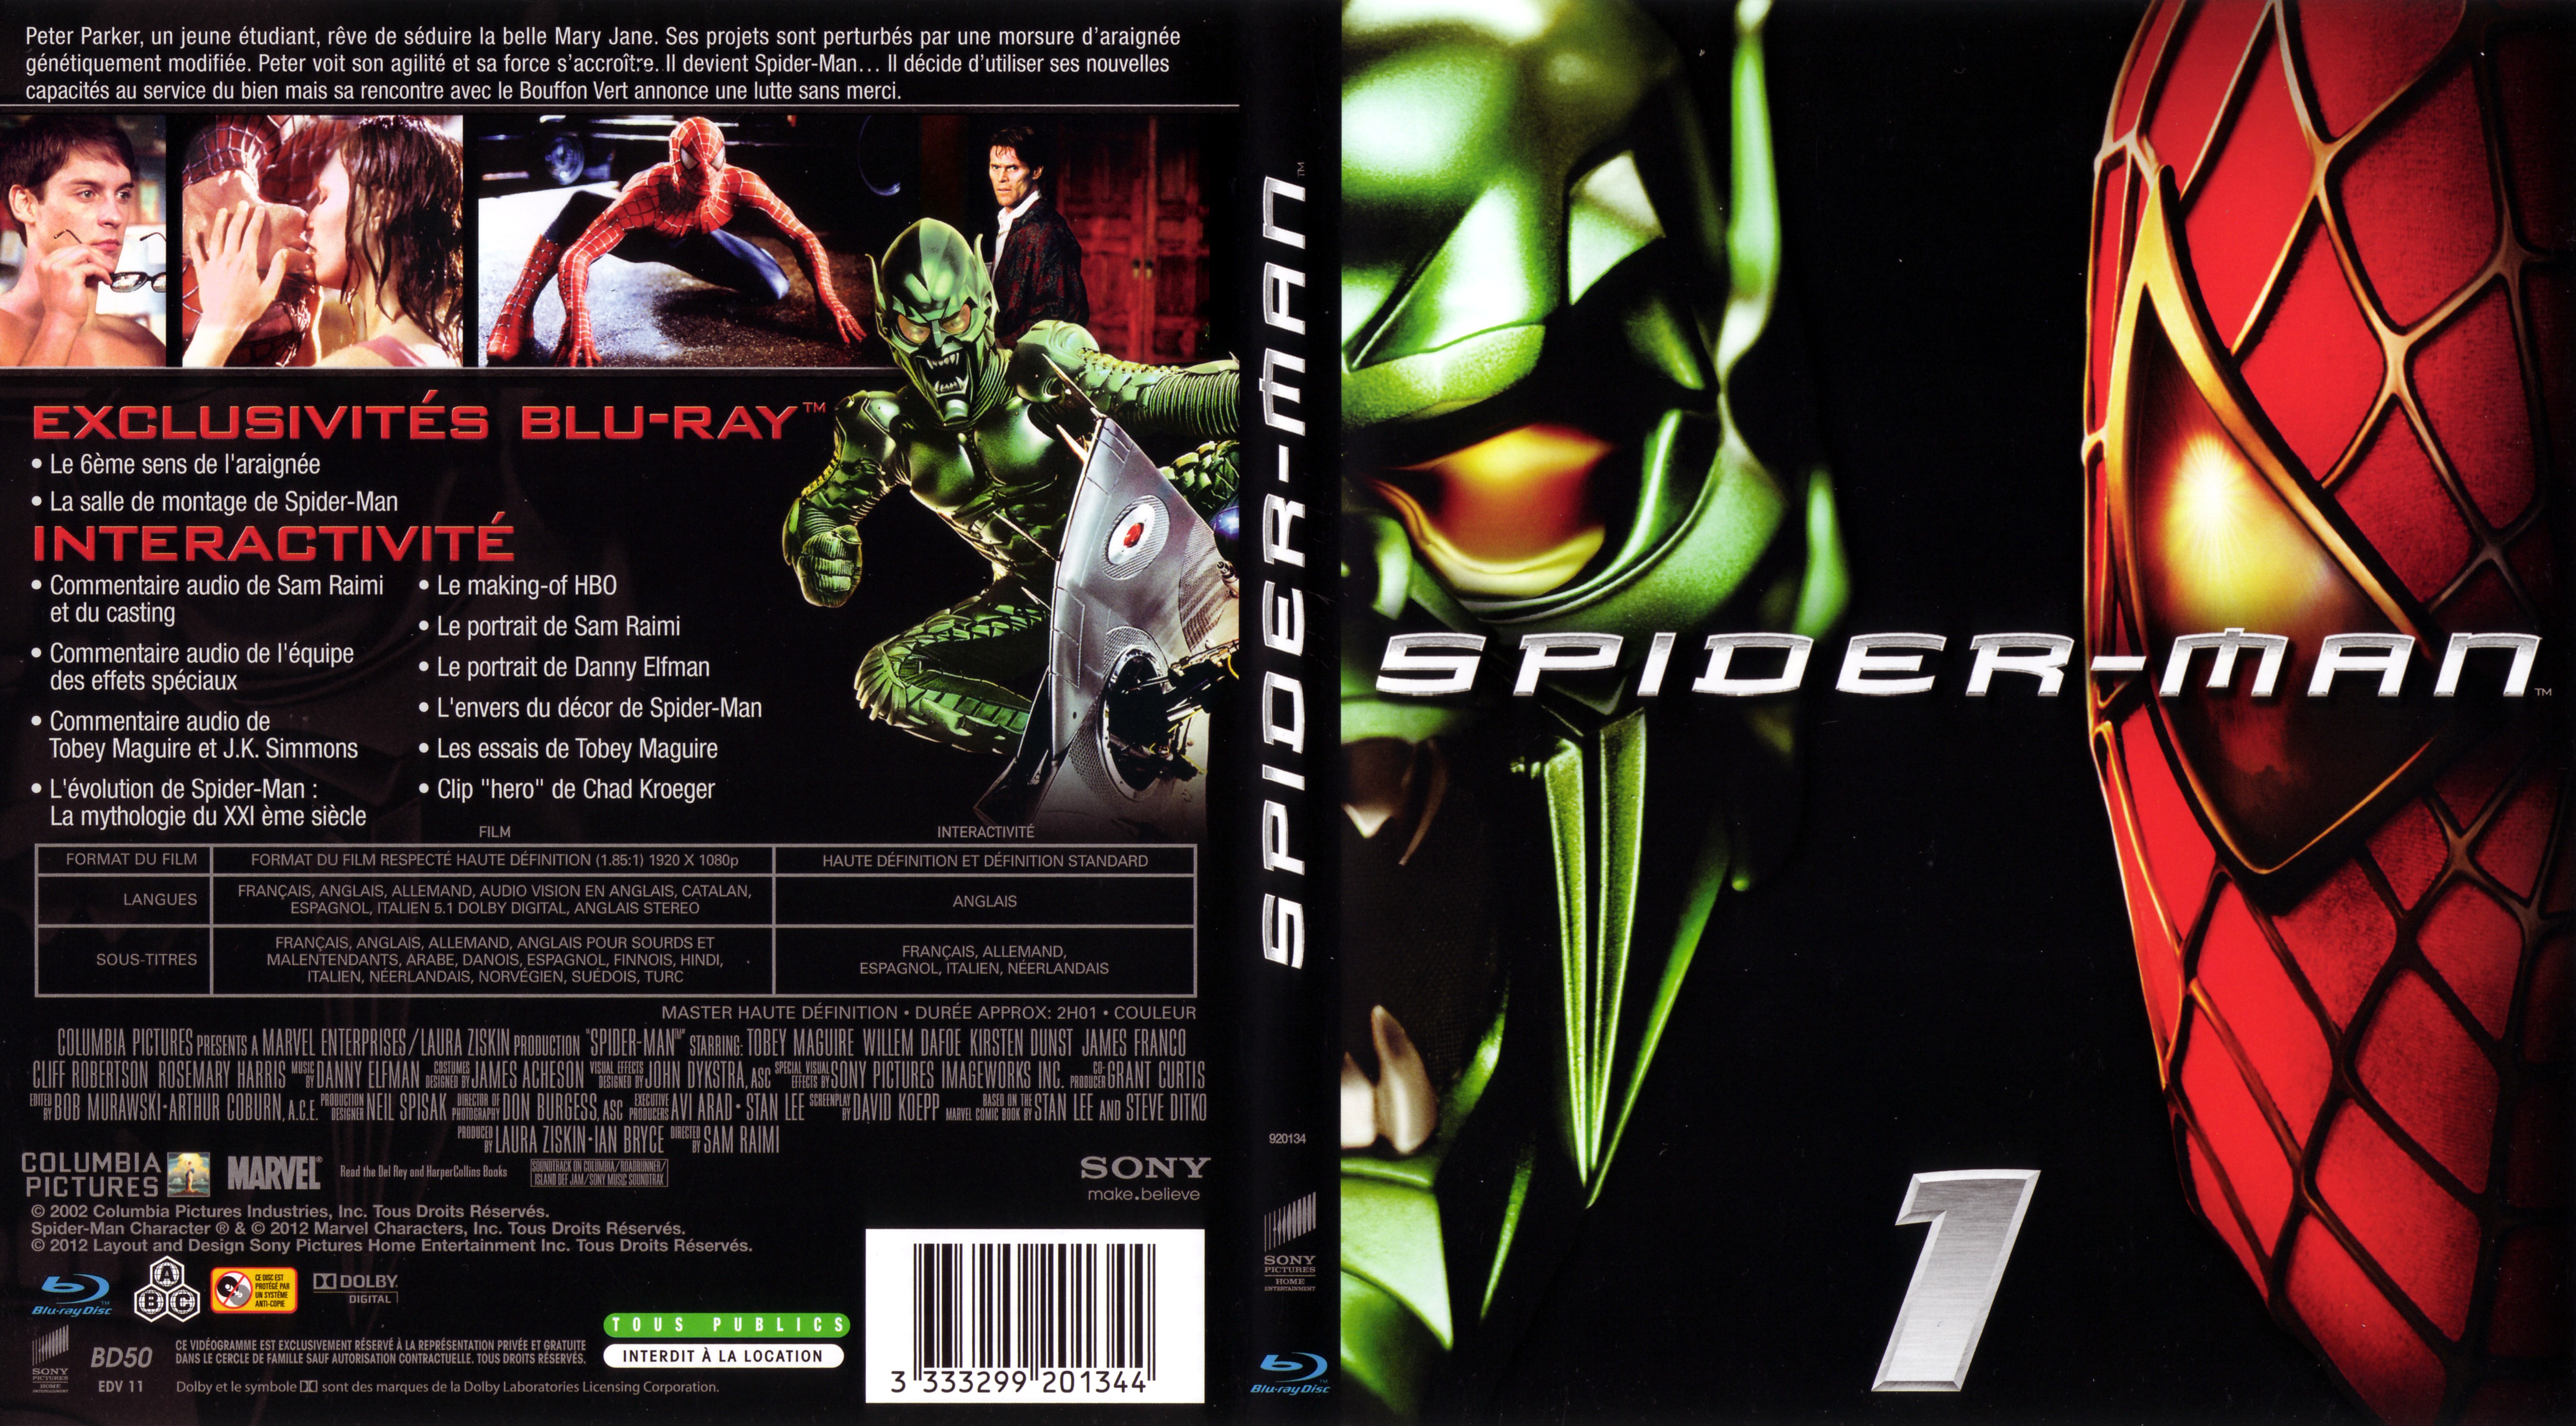 Jaquette DVD Spiderman (BLU-RAY) v3